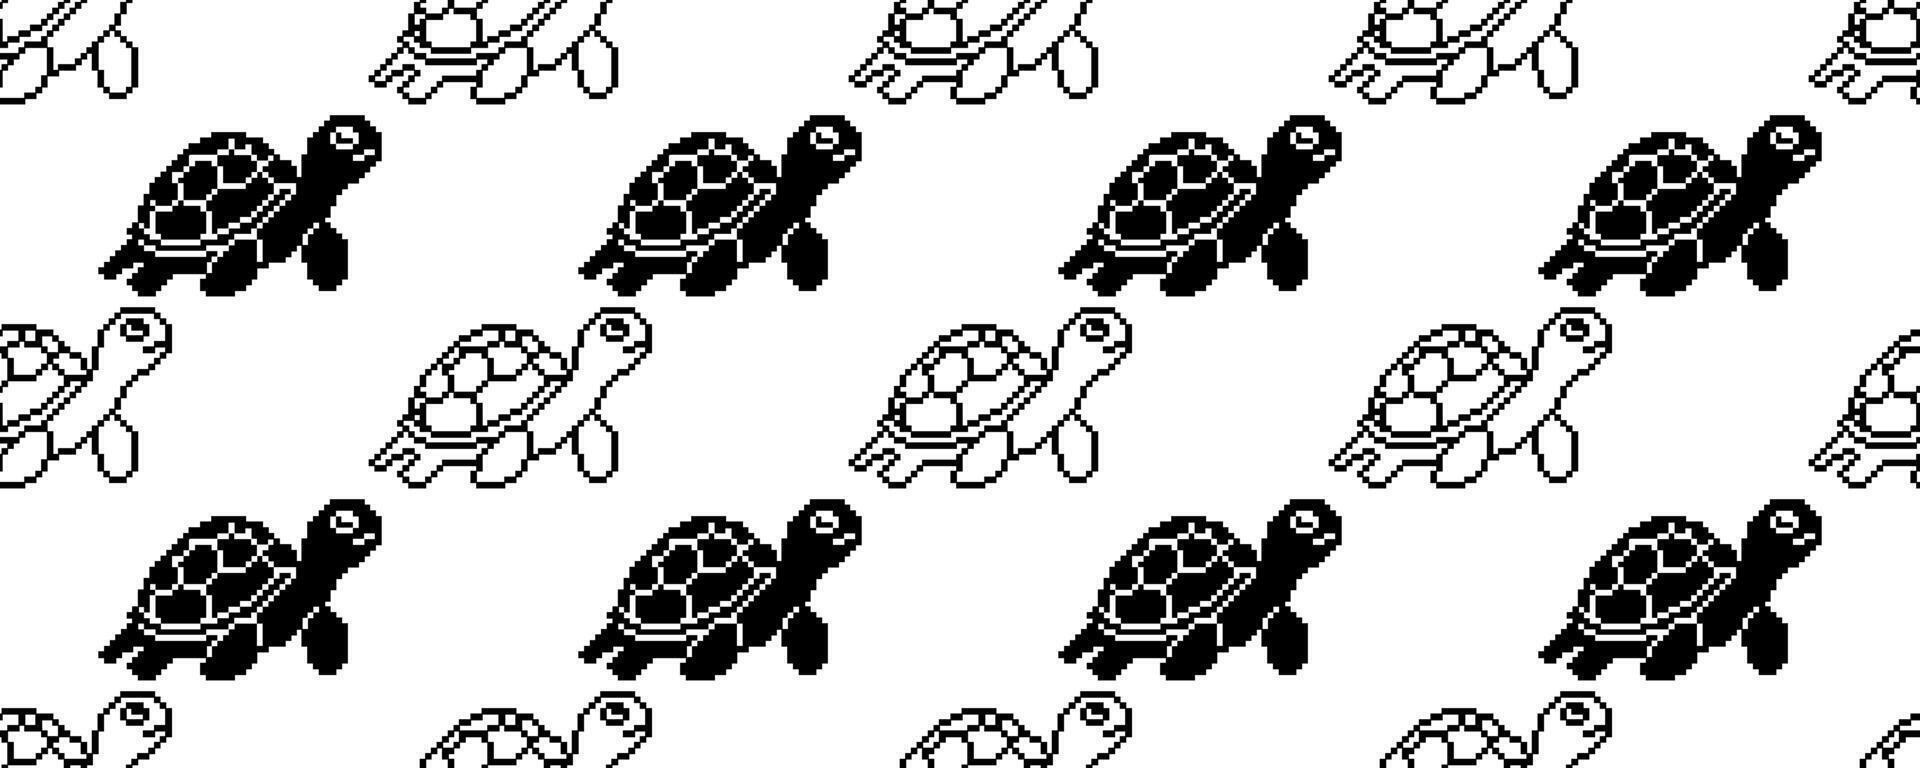 pixel art turtles seamless pattern vector